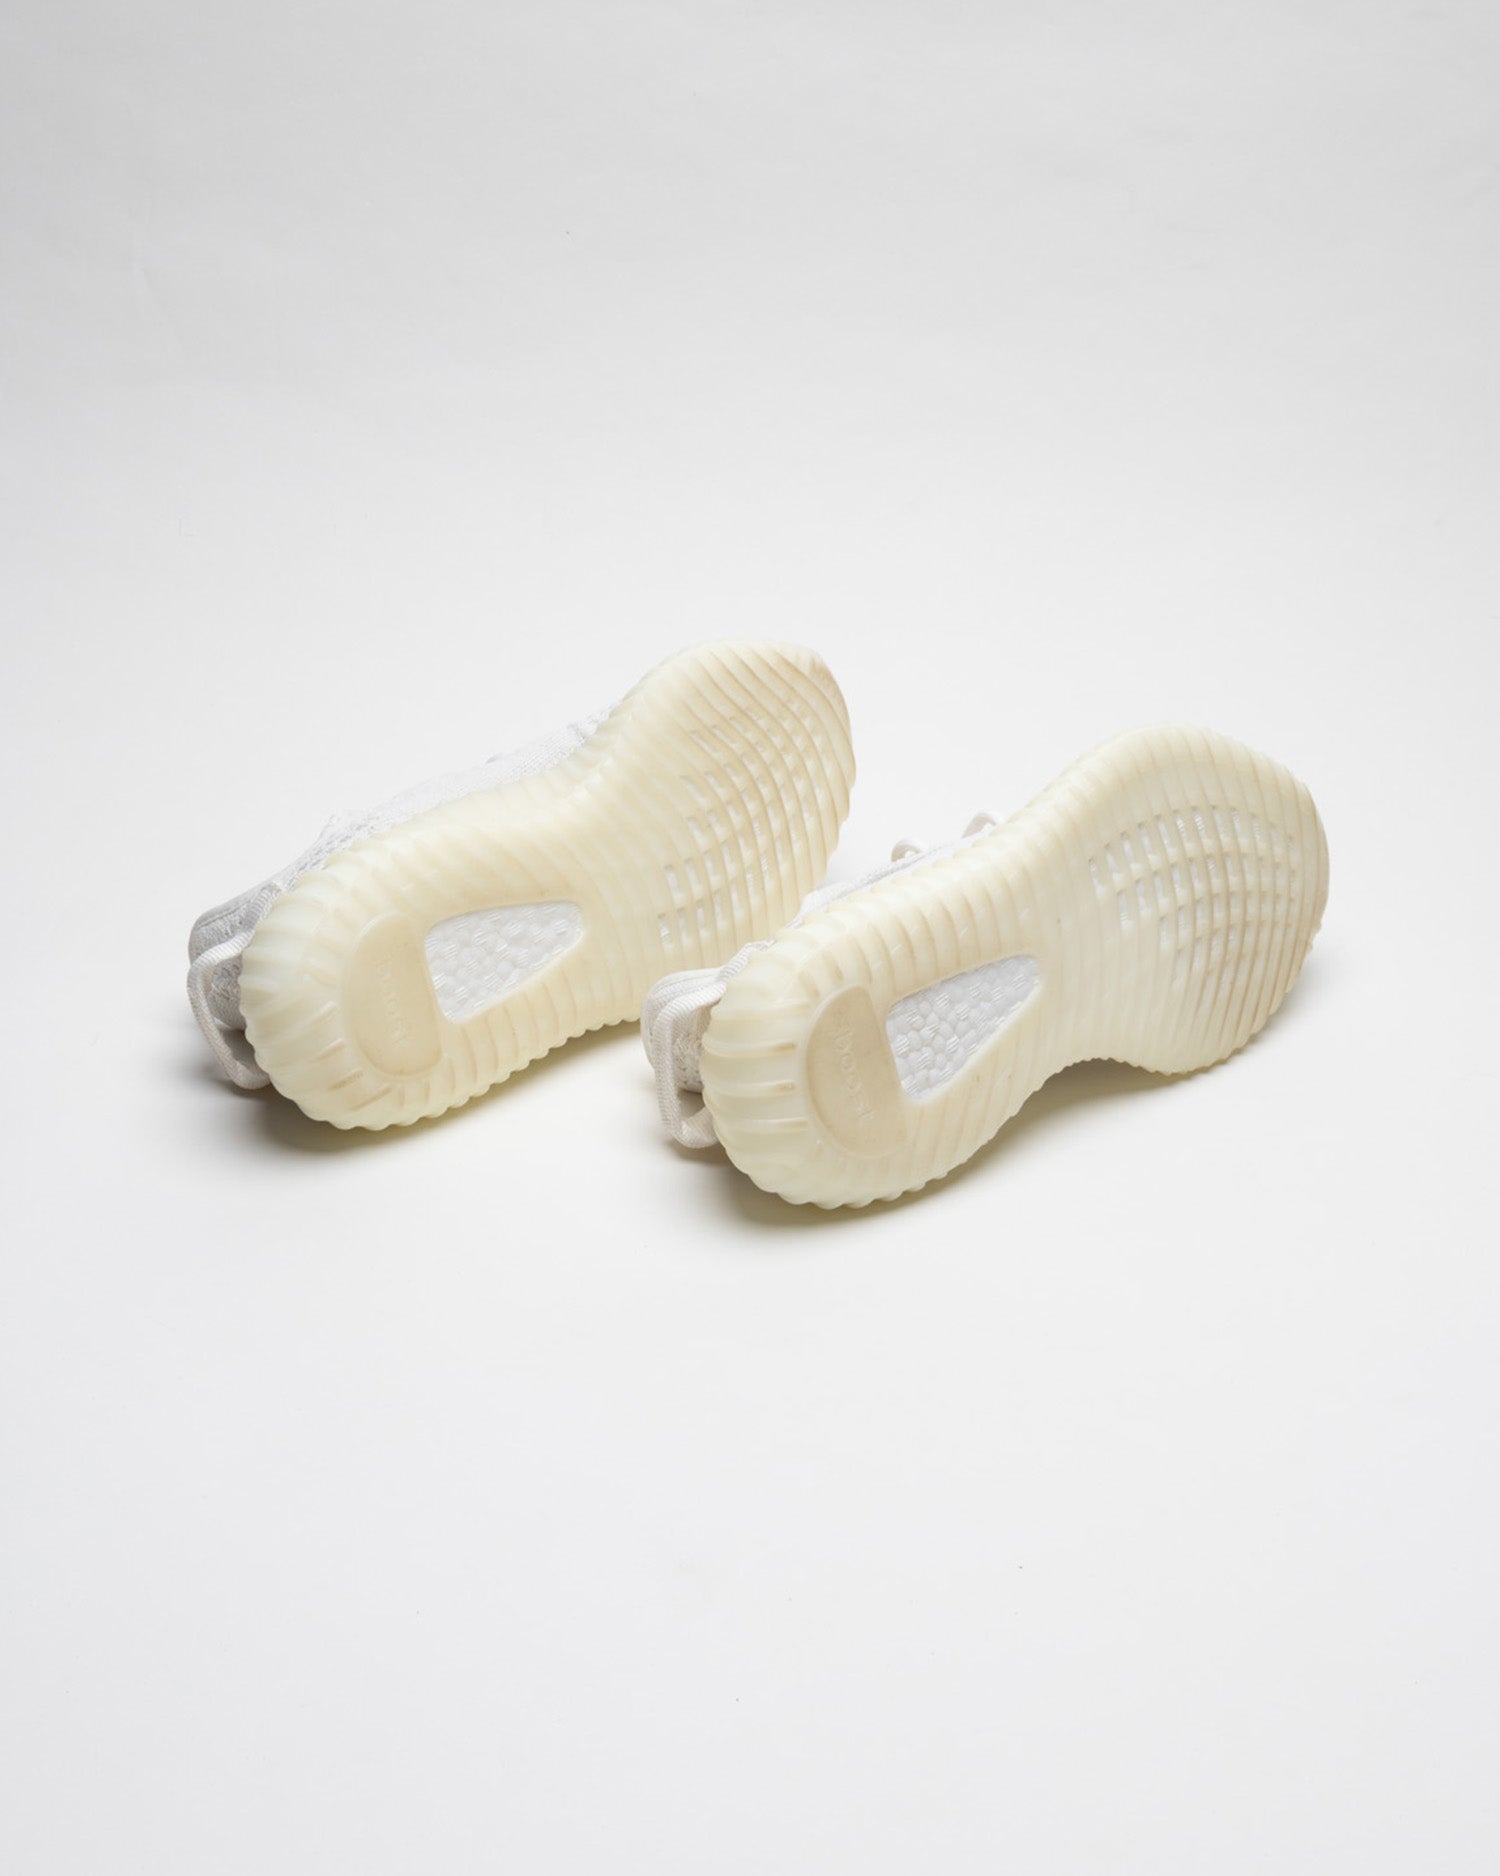 Adidas Yeezy Boost 350 V2 Sneaker Bone